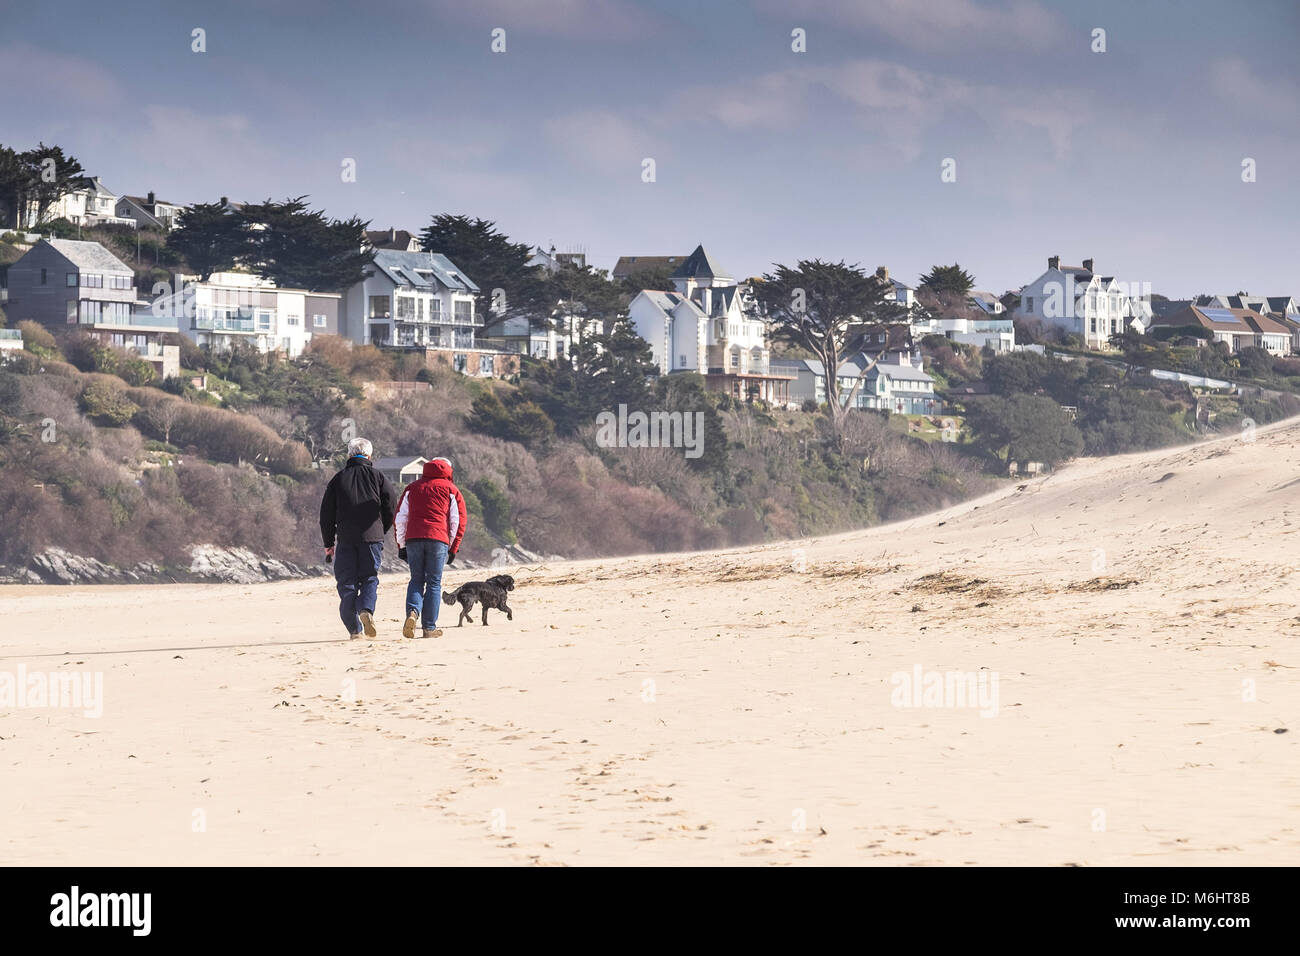 Les gens qui marchent sur la plage de Crantock en Newquay Cornwall. Banque D'Images